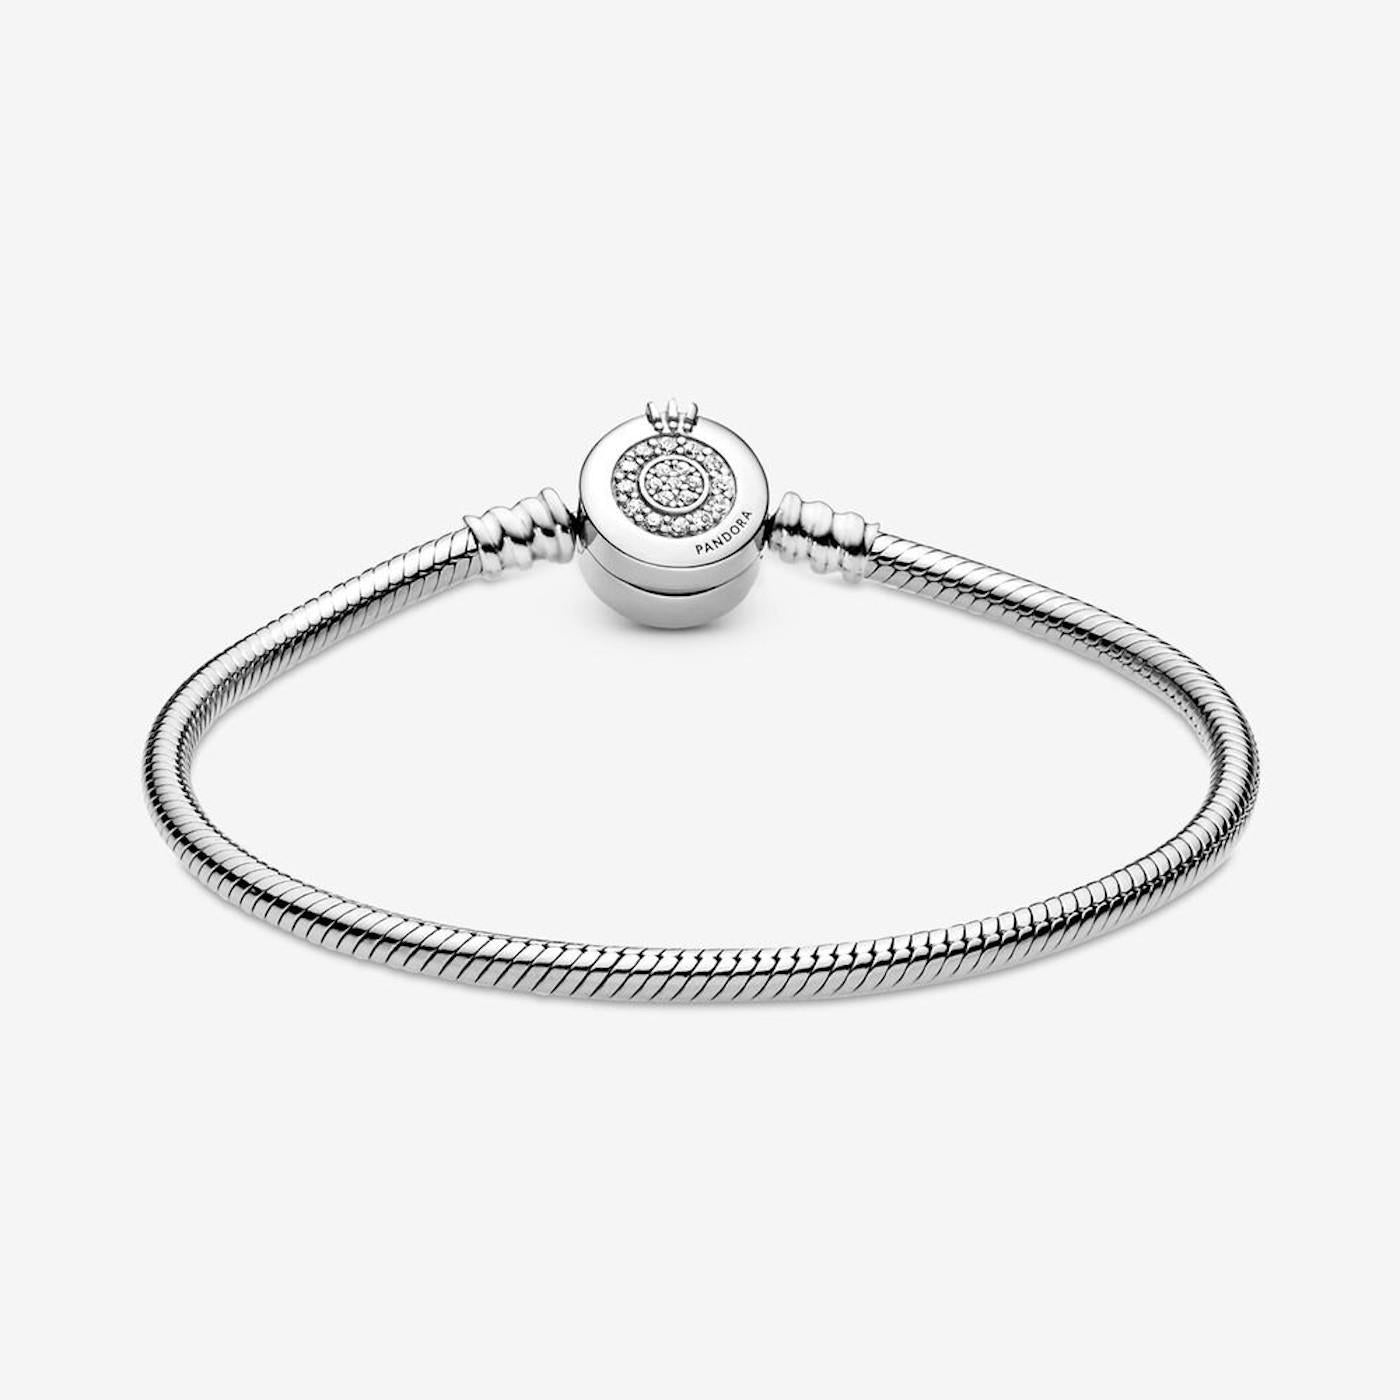 Pandora Snake chain sterling silver bracelet 19 cm